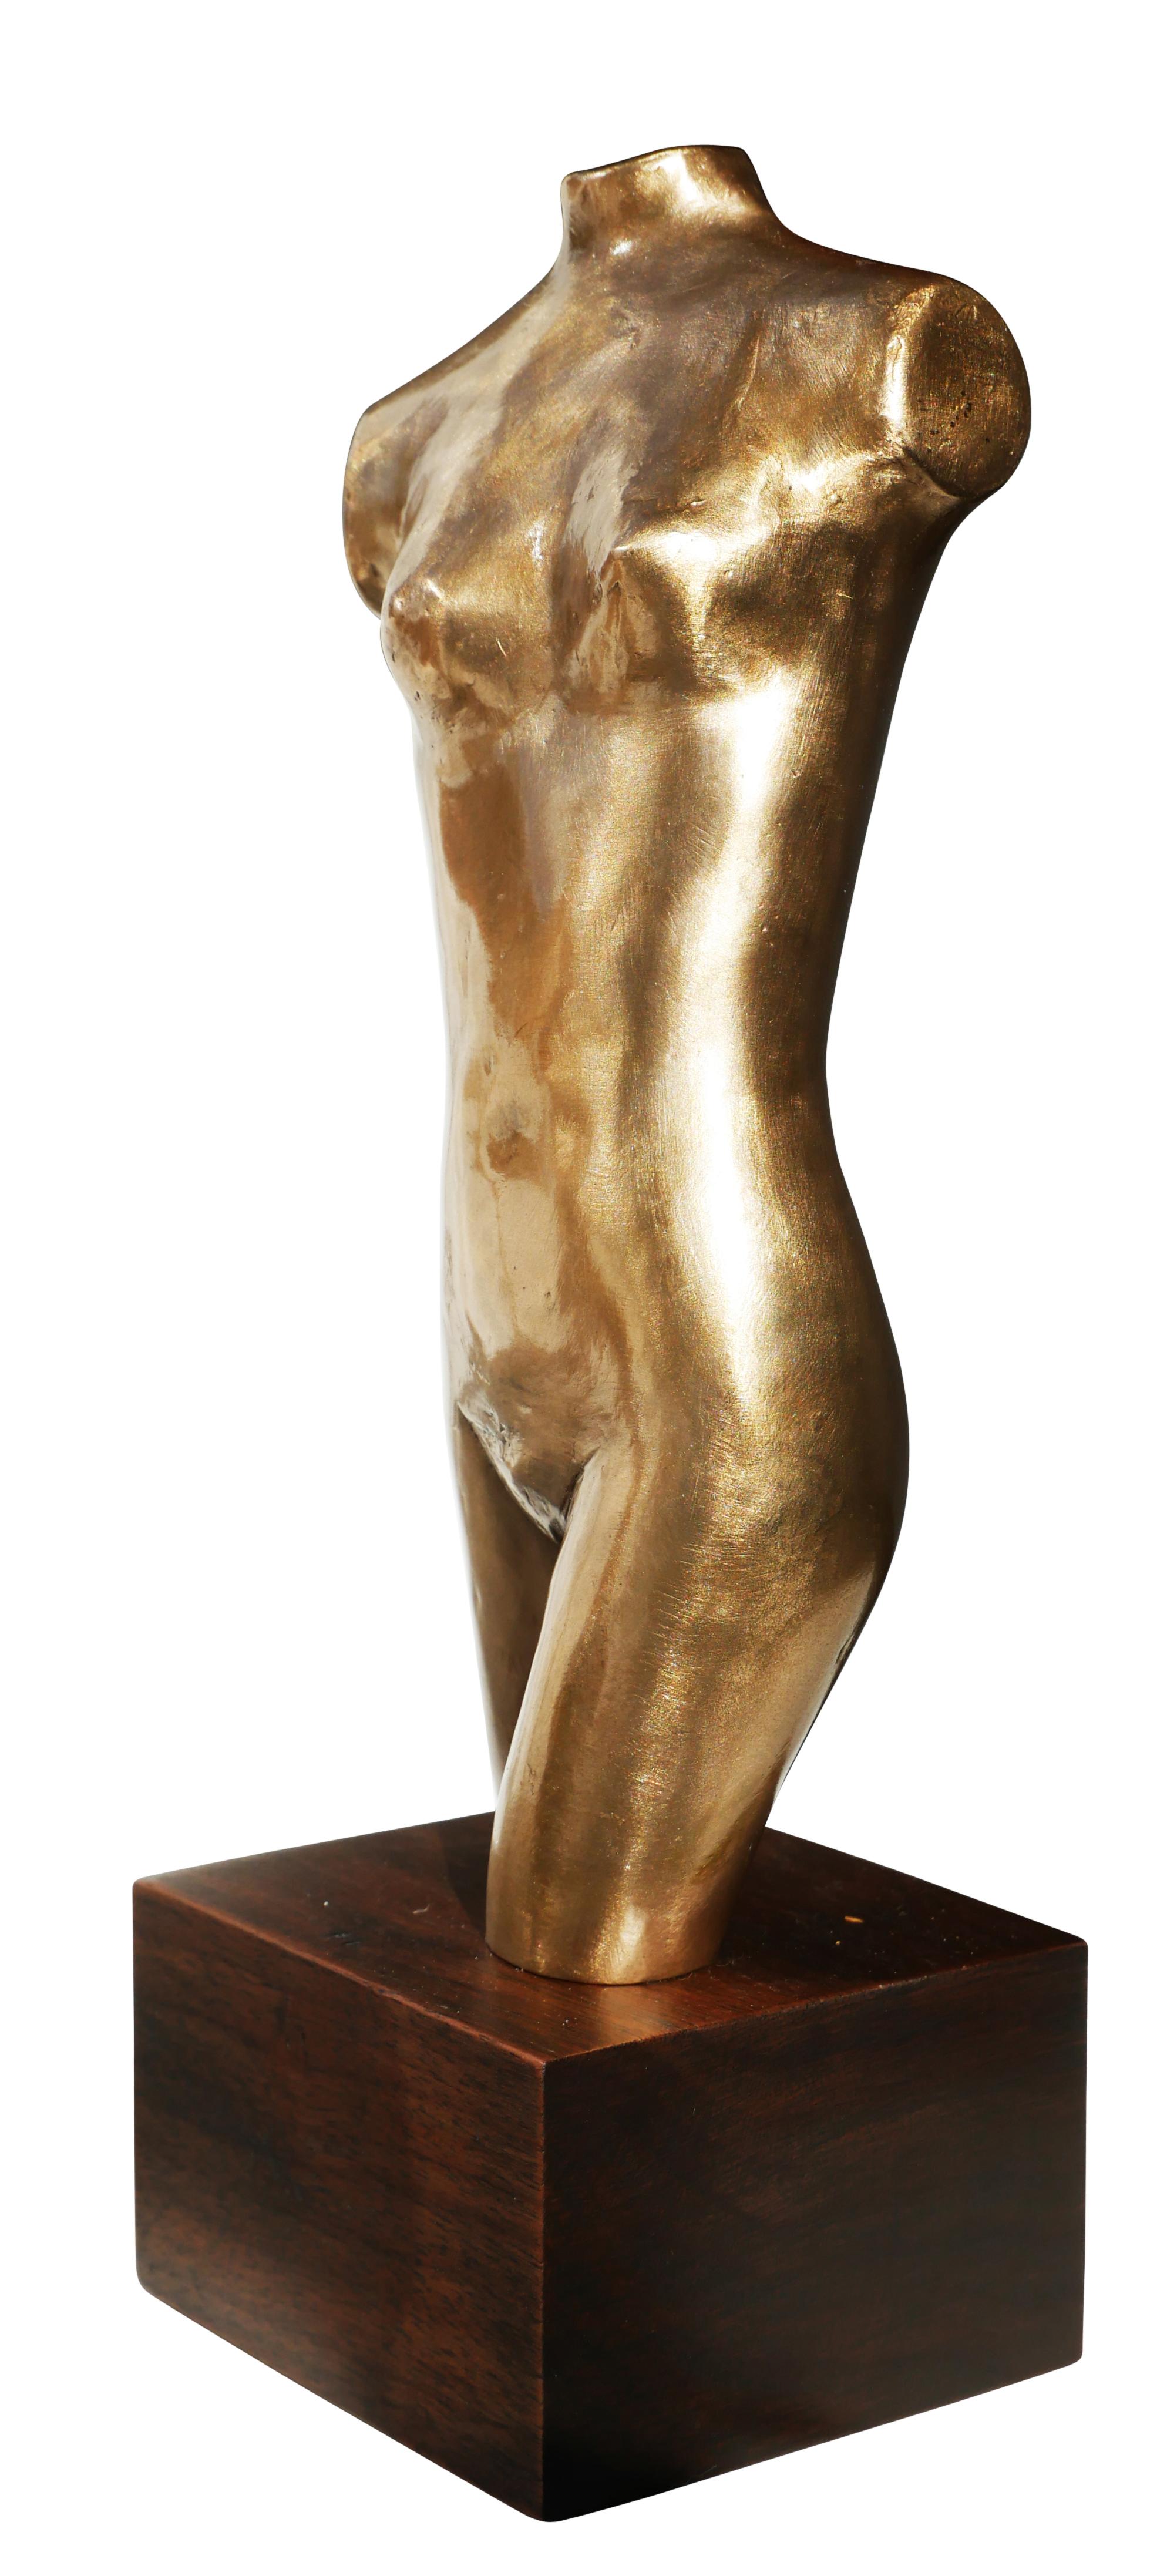 David Adickes Nude Sculpture - Abstract Modernist Armless Female Nude Torso Bust Bronze Sculpture